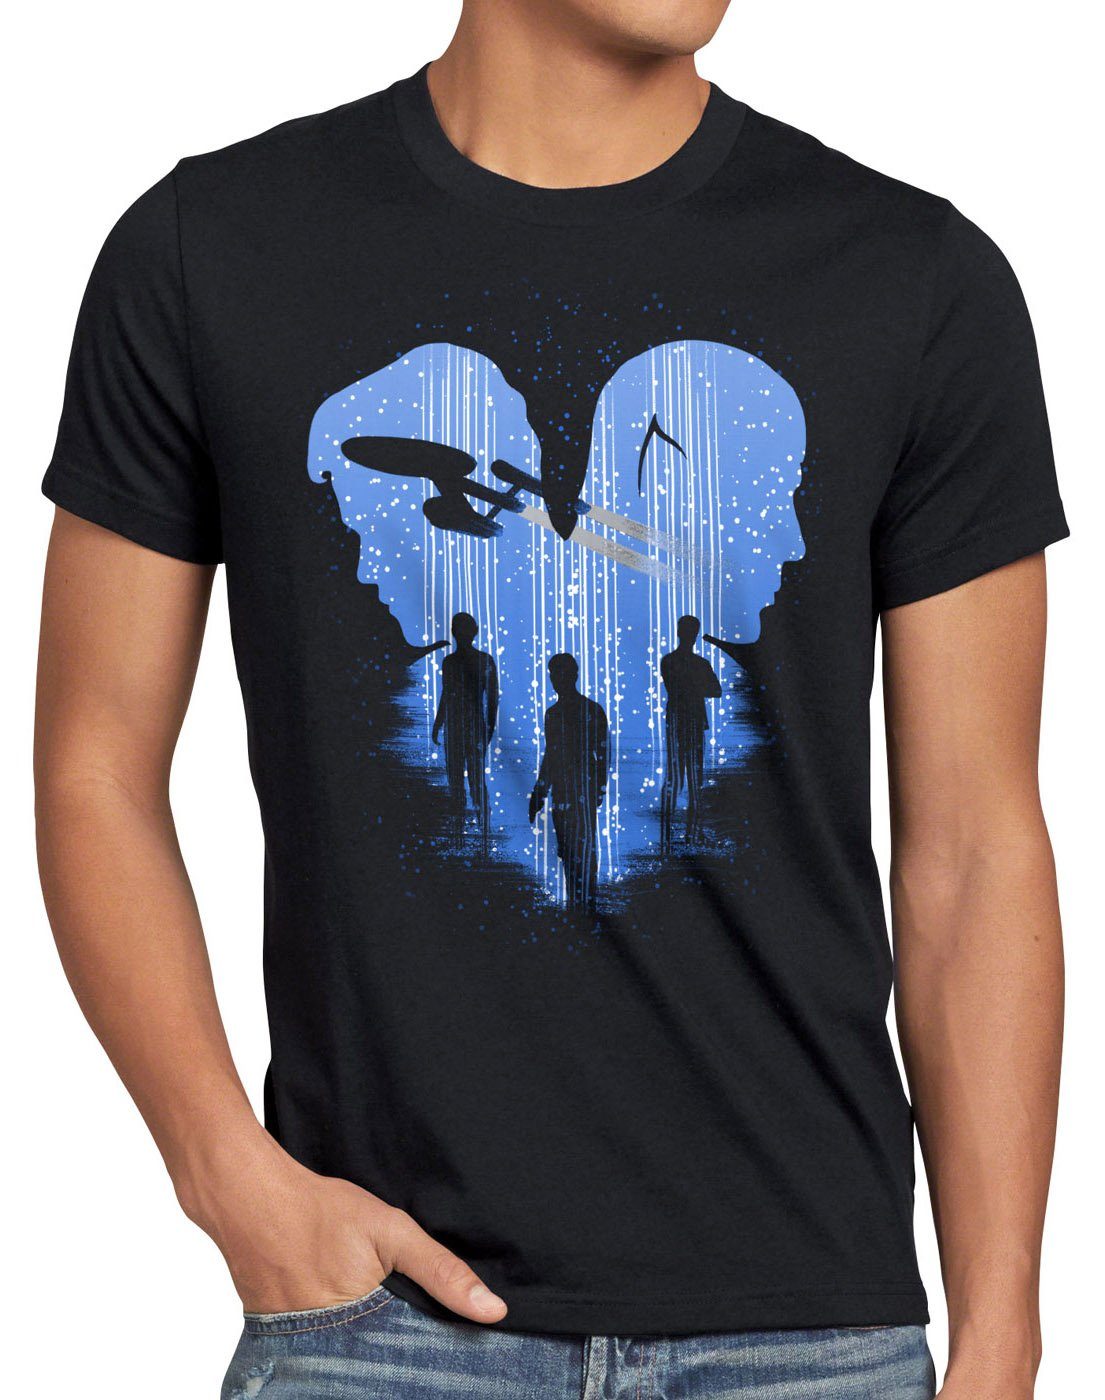 Crew star trekkie Trek Herren style3 beamen T-Shirt Print-Shirt